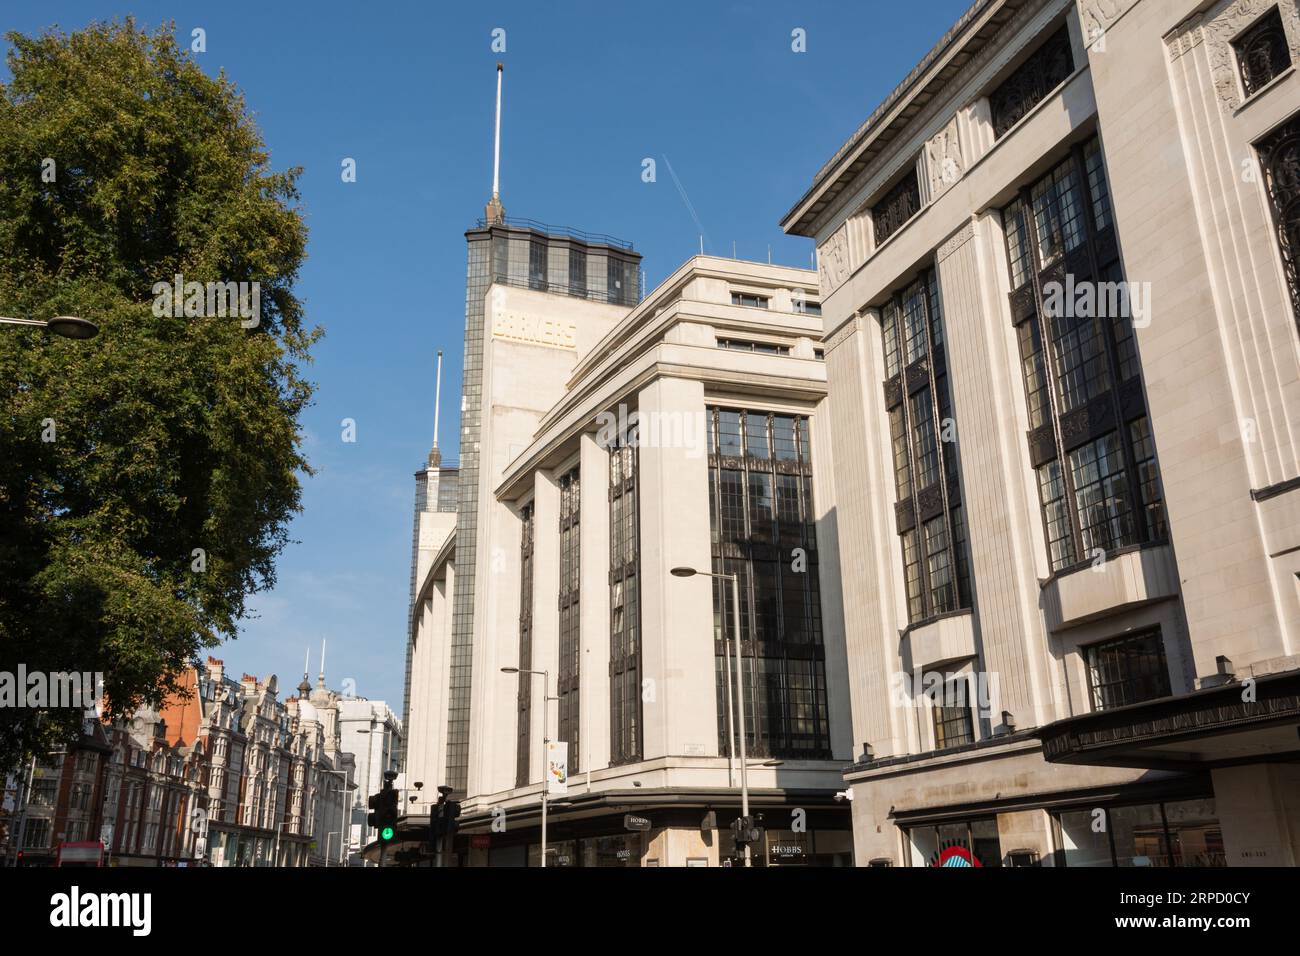 The exterior of the former Barkers Department Store, Kensington High Street, Kensington, London, W8, England, U.K. Stock Photo